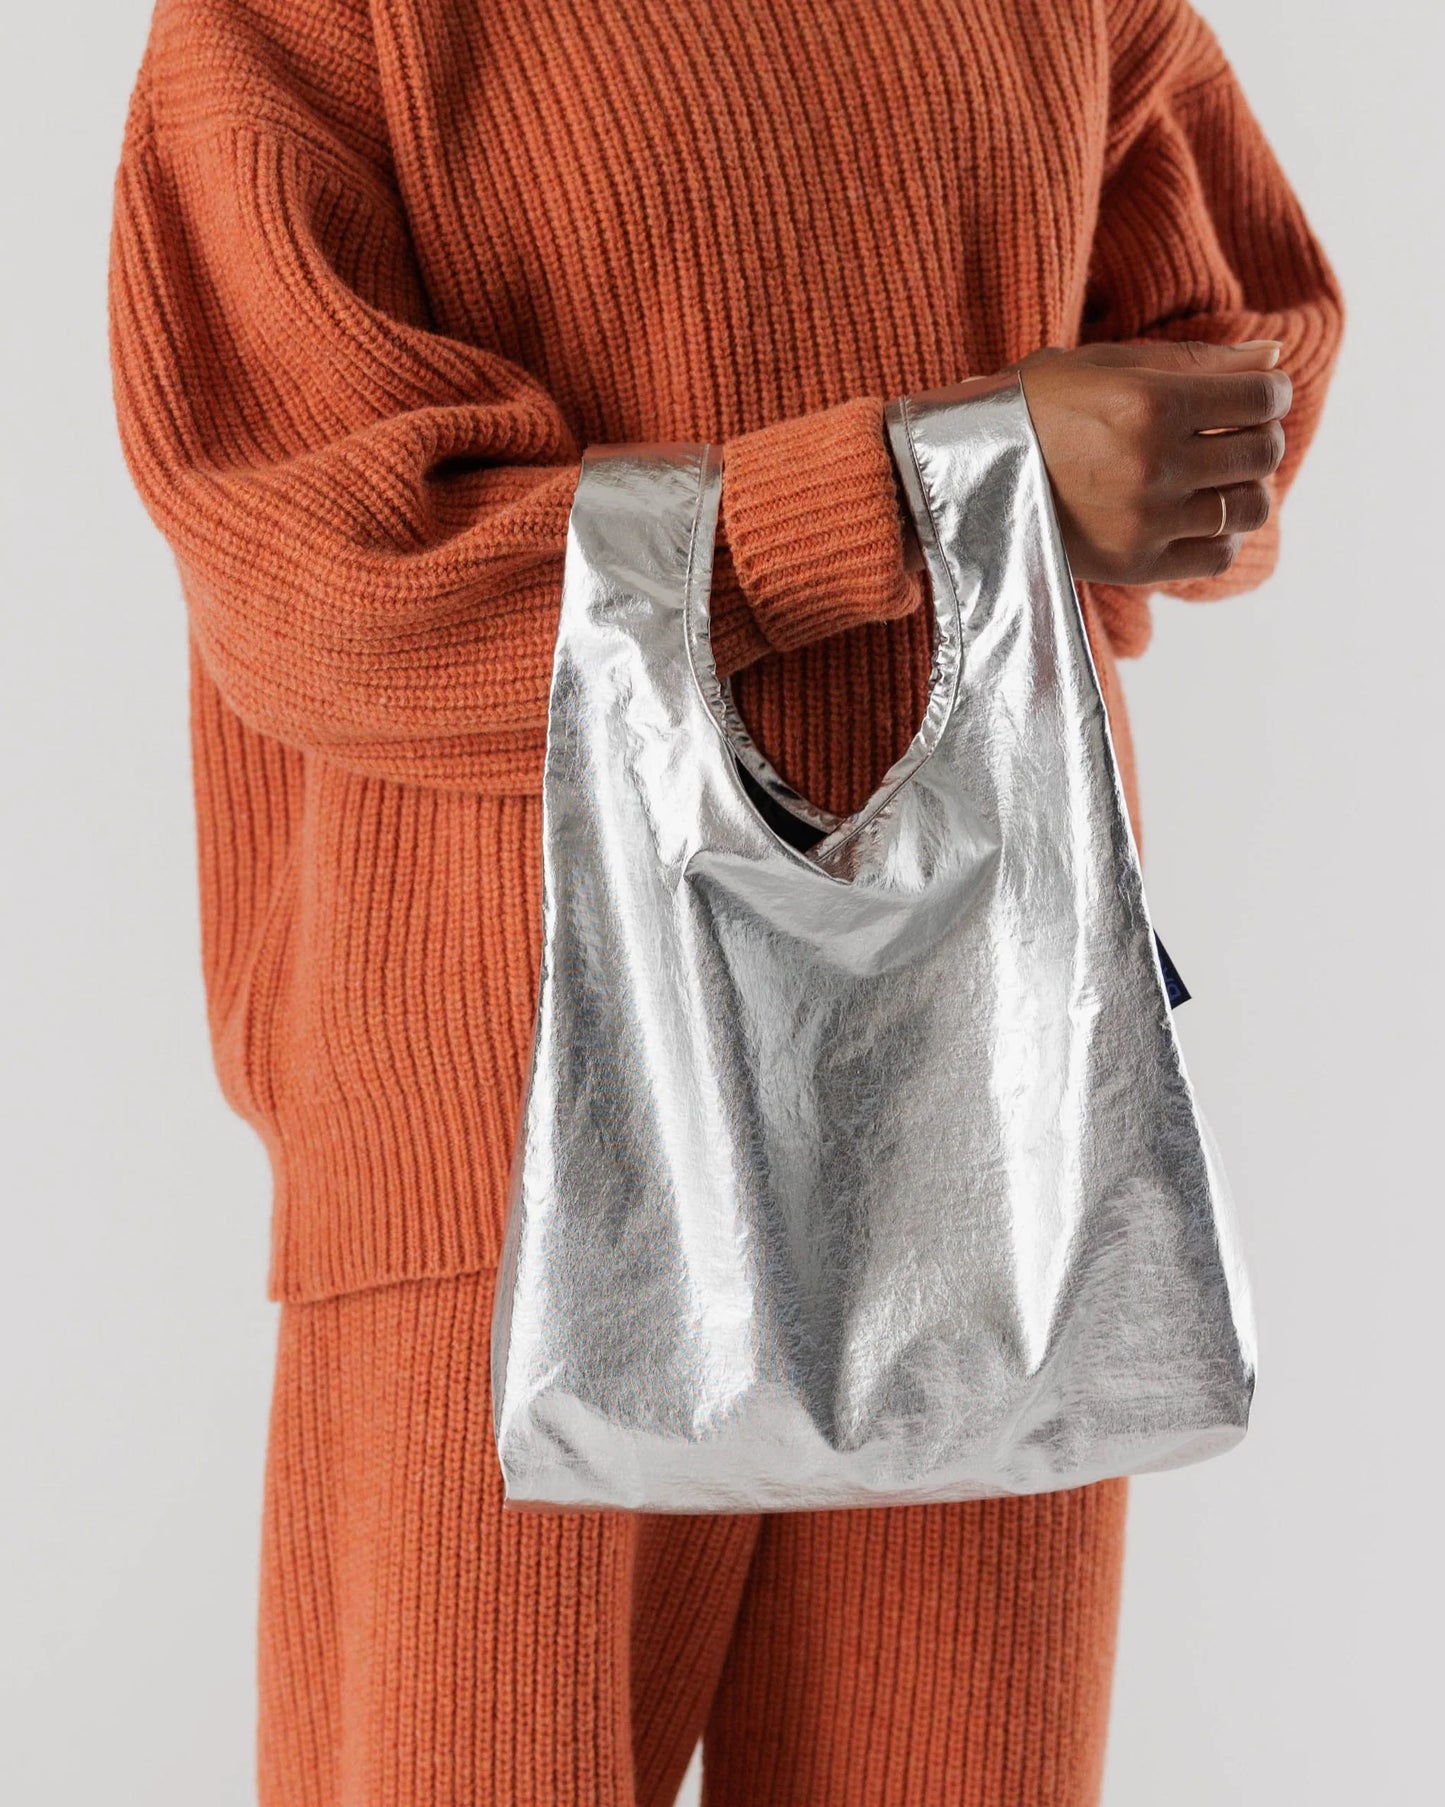 BAGGU Baby Reusable Bag - Metallic Silver